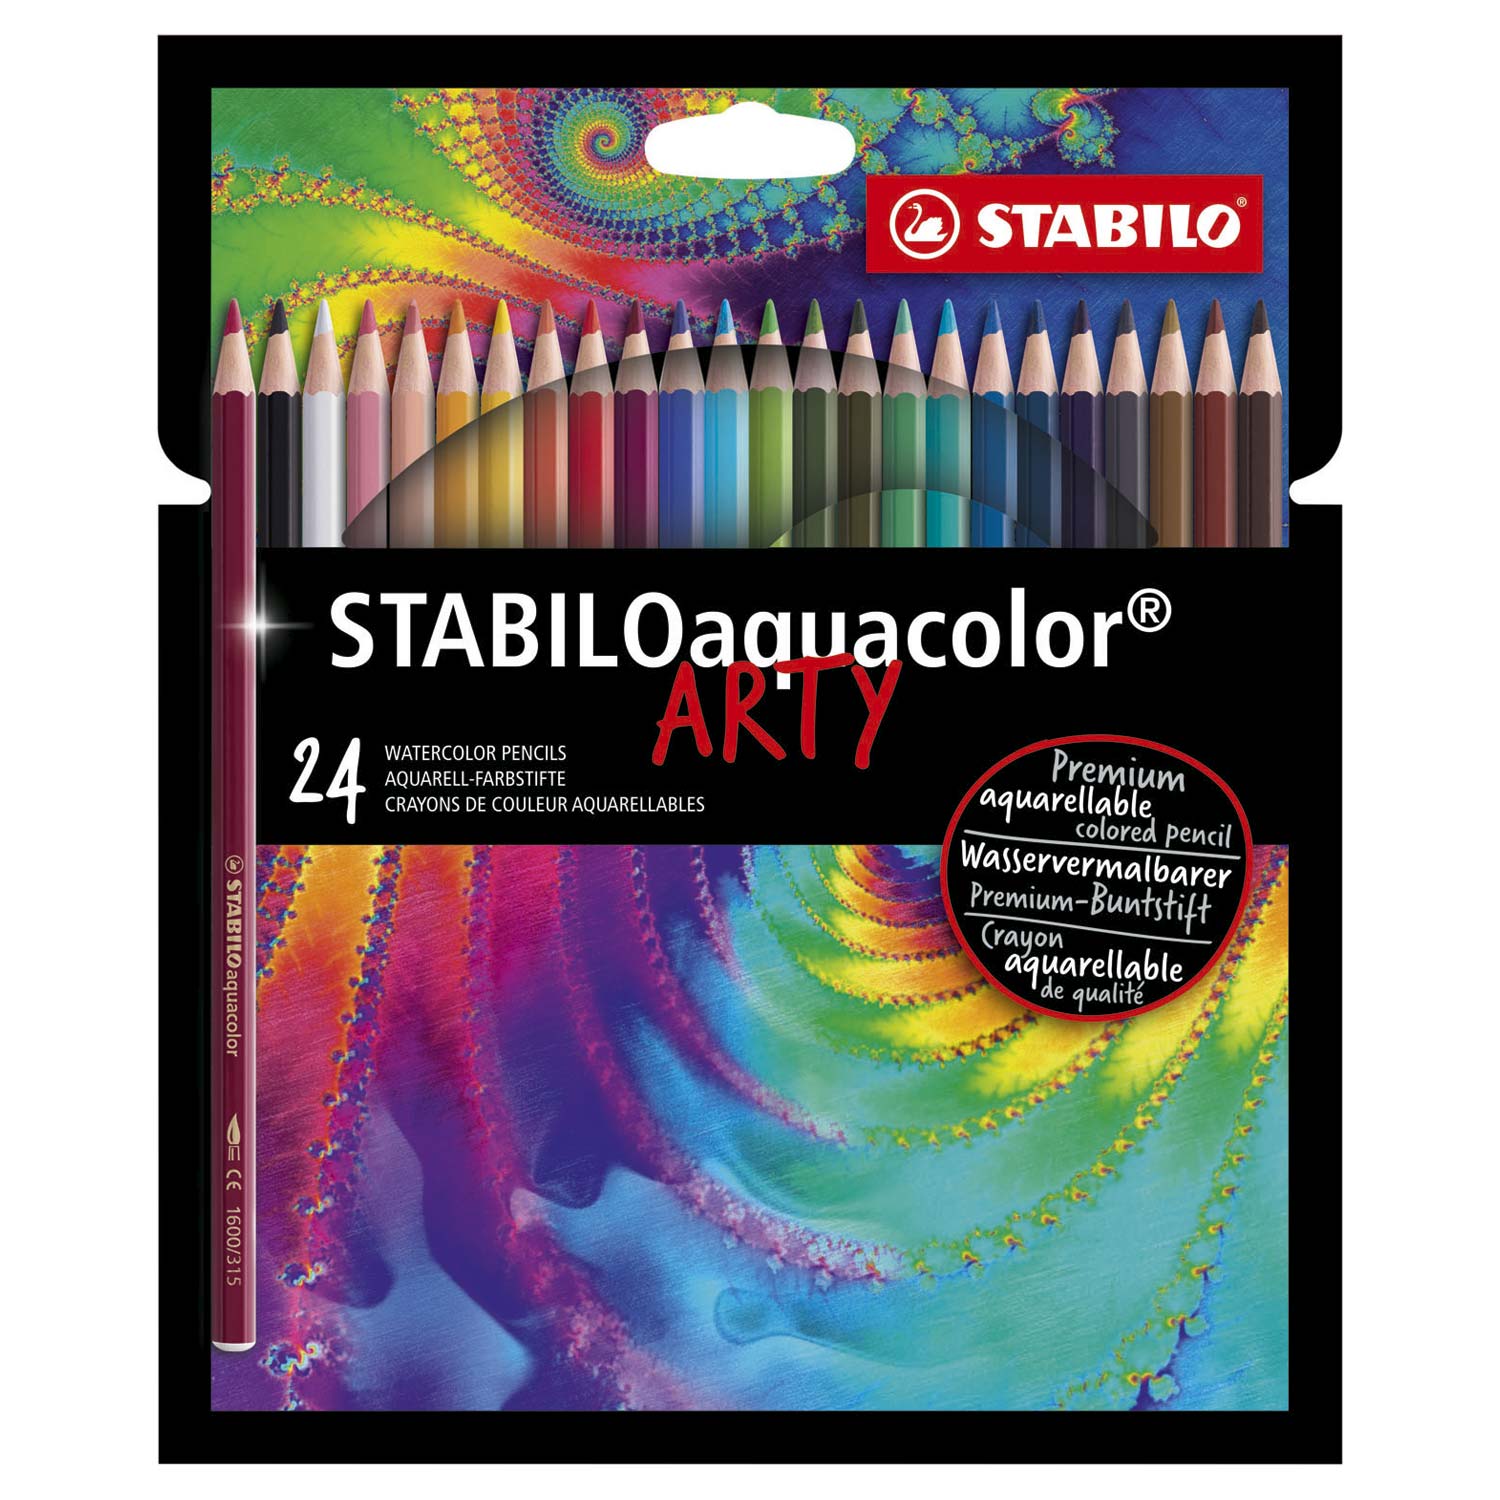 STABILO Aquacolor - Crayons de couleur aquarelle - ARTY - Set 24 Pcs.